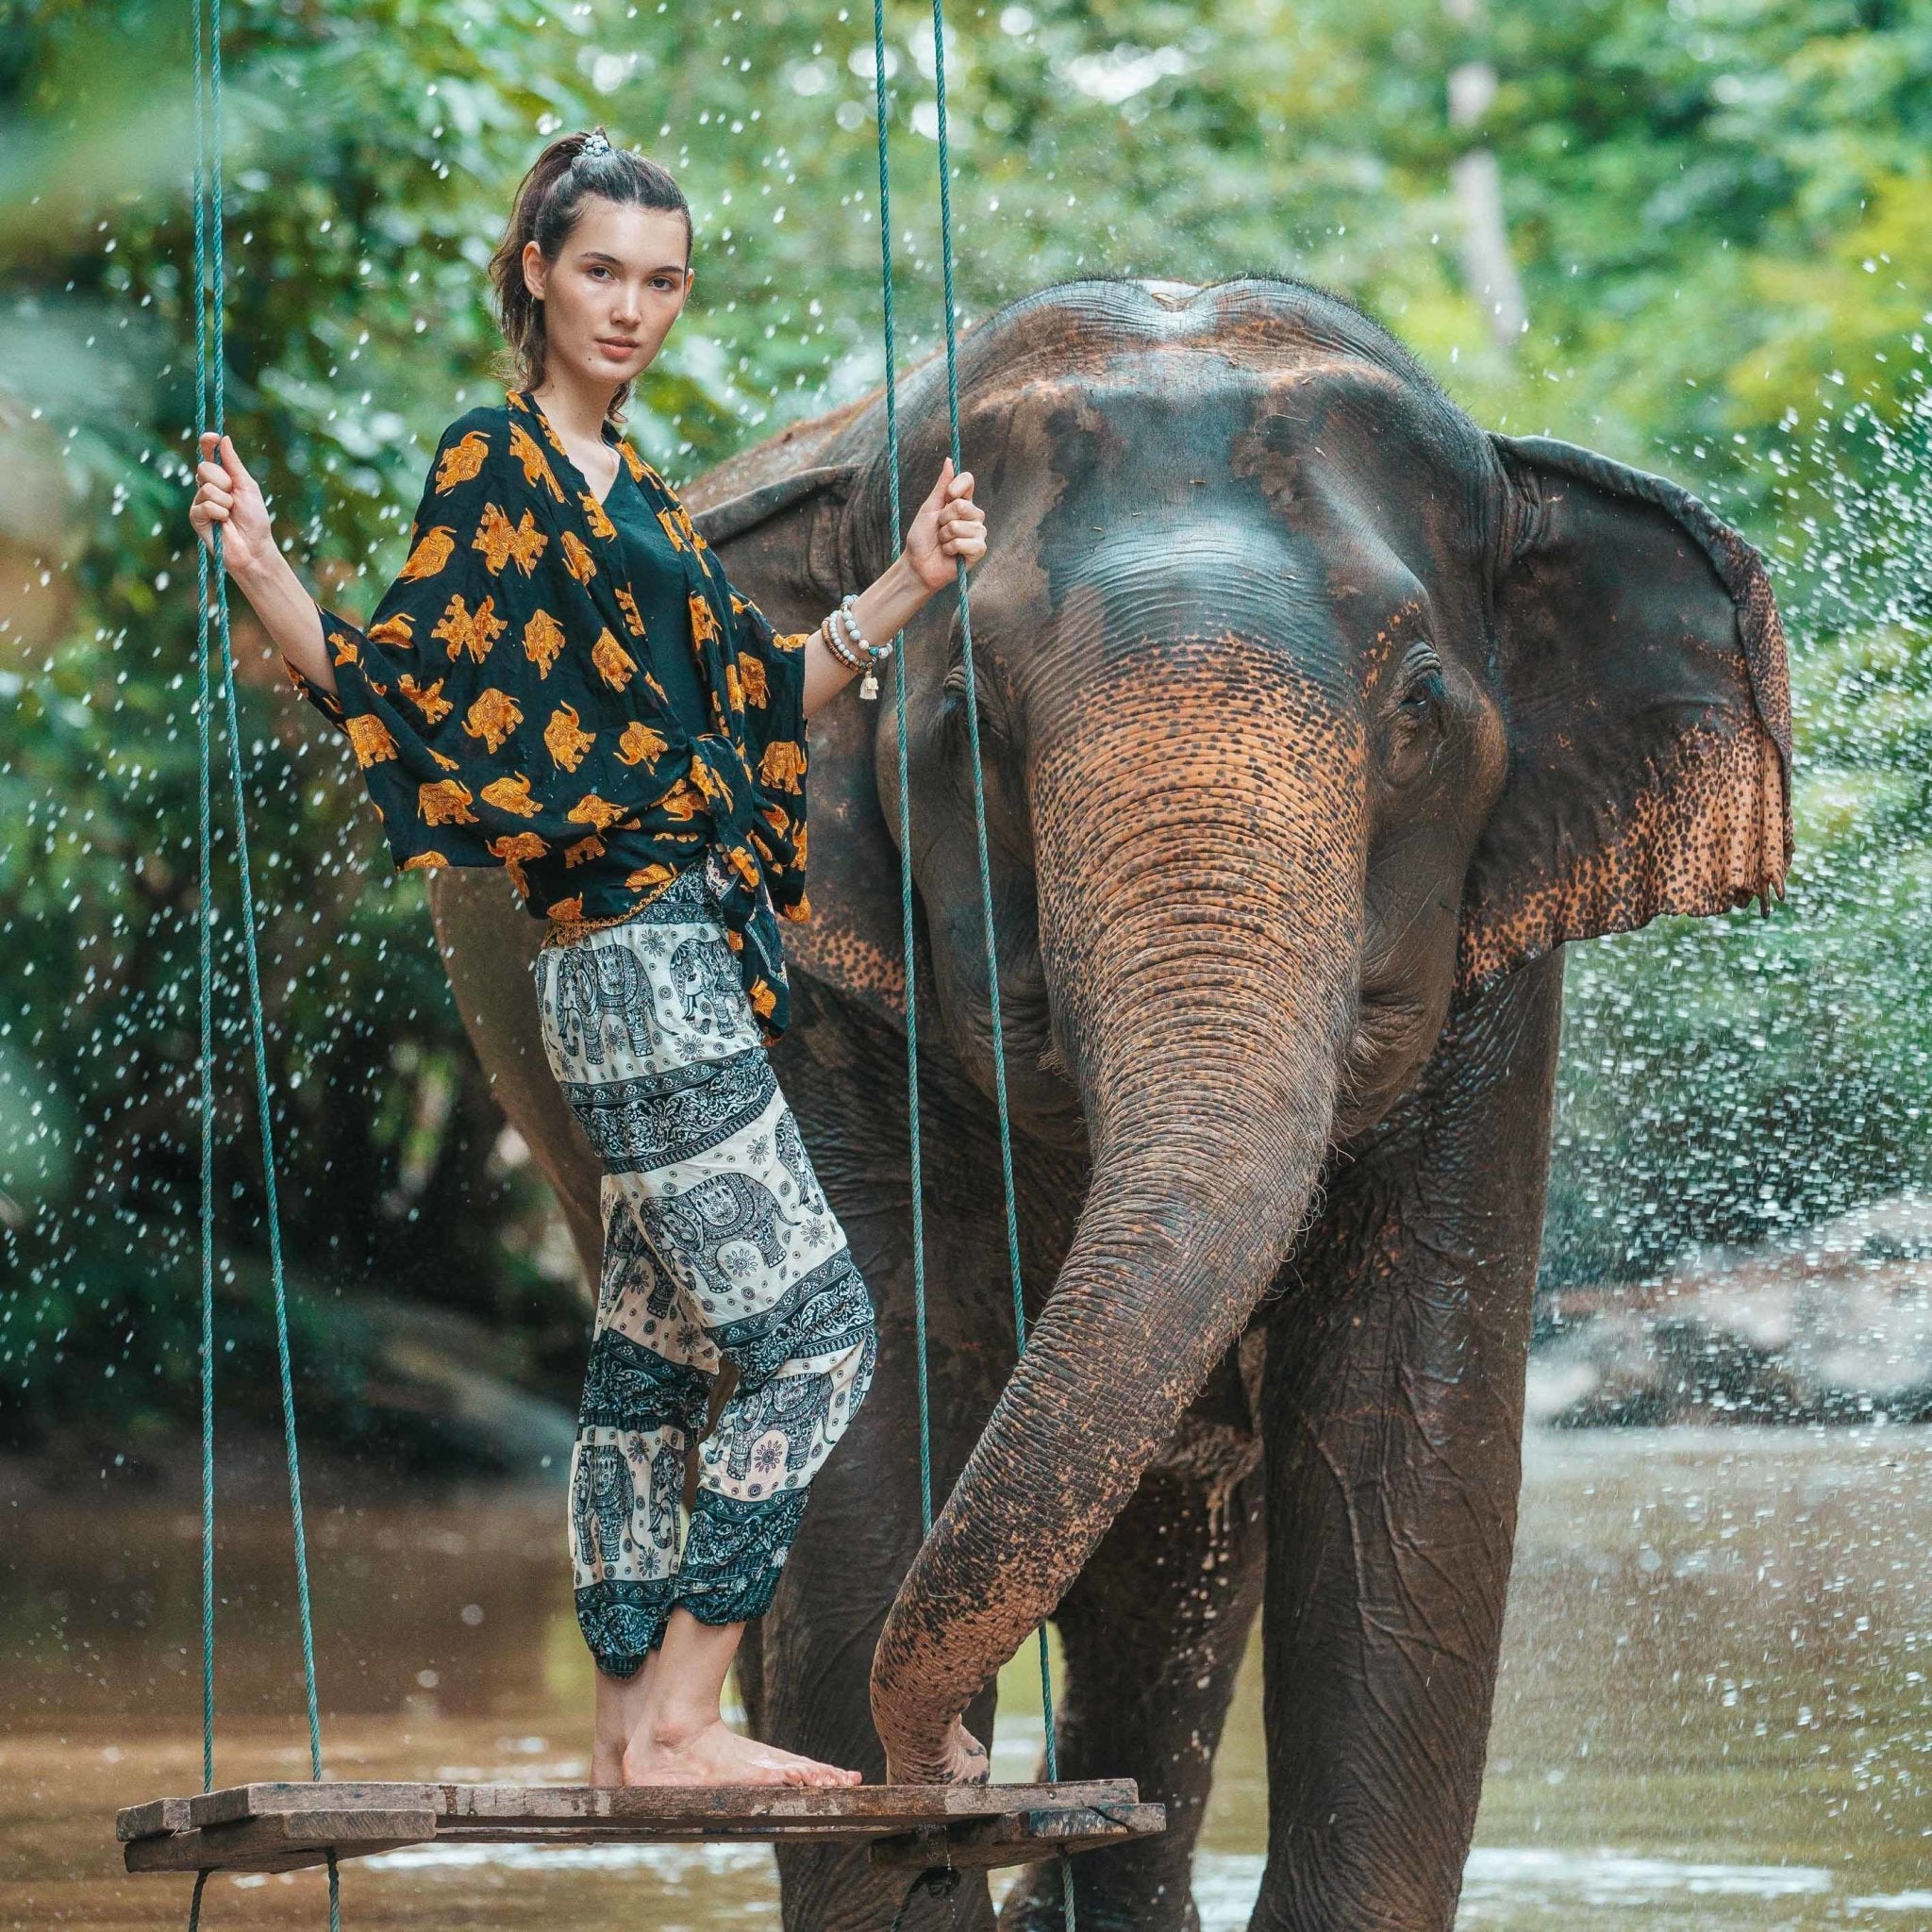 BALI PANTS - Elastic Waist Elepanta Elastic Waist Pants - Buy Today Elephant Pants Jewelry And Bohemian Clothes Handmade In Thailand Help To Save The Elephants FairTrade And Vegan